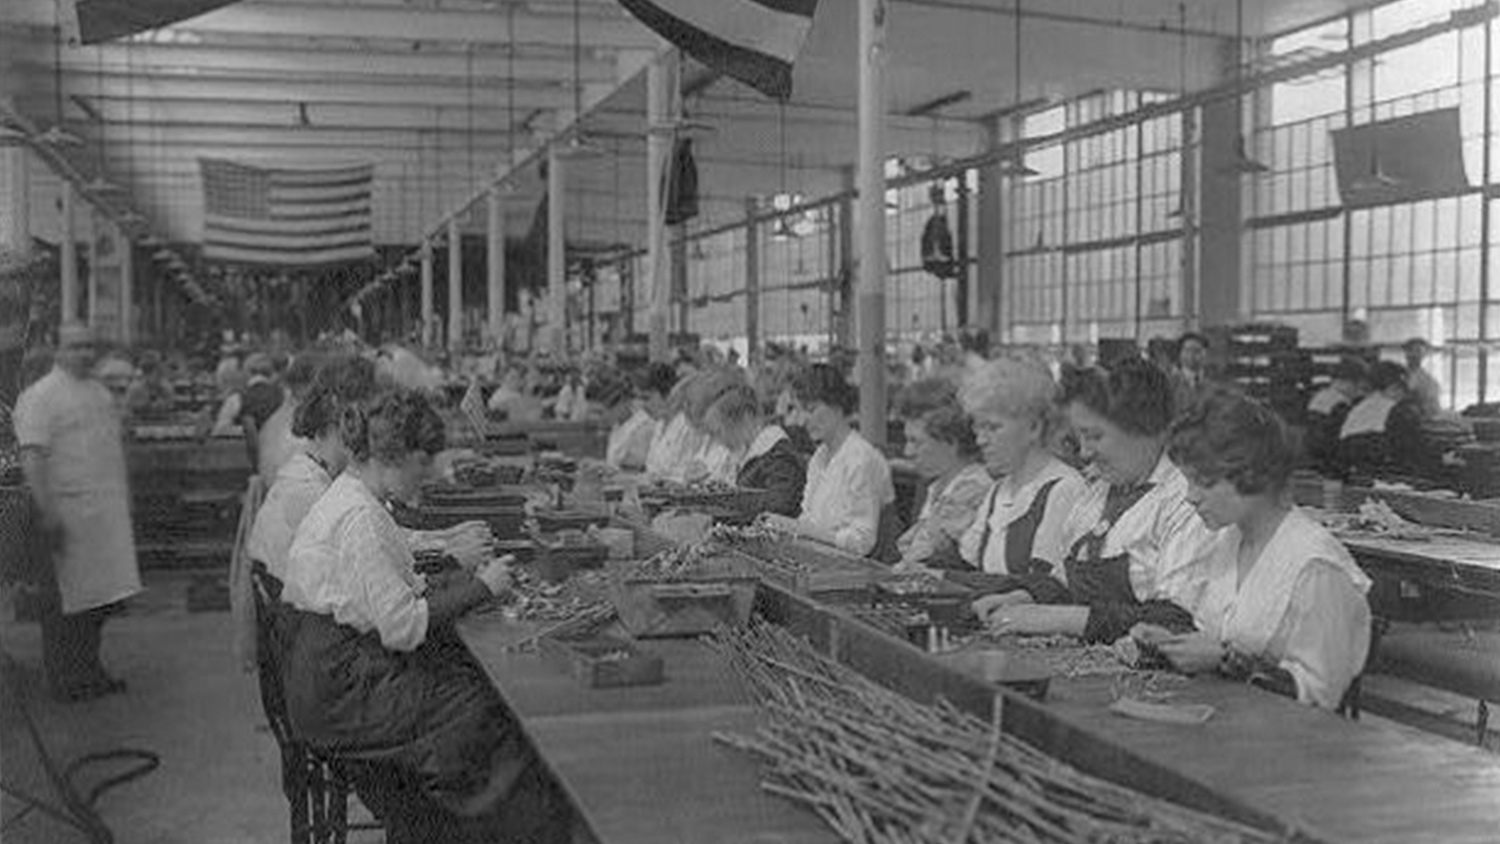 Women were employed in Colt’s factories during both world wars